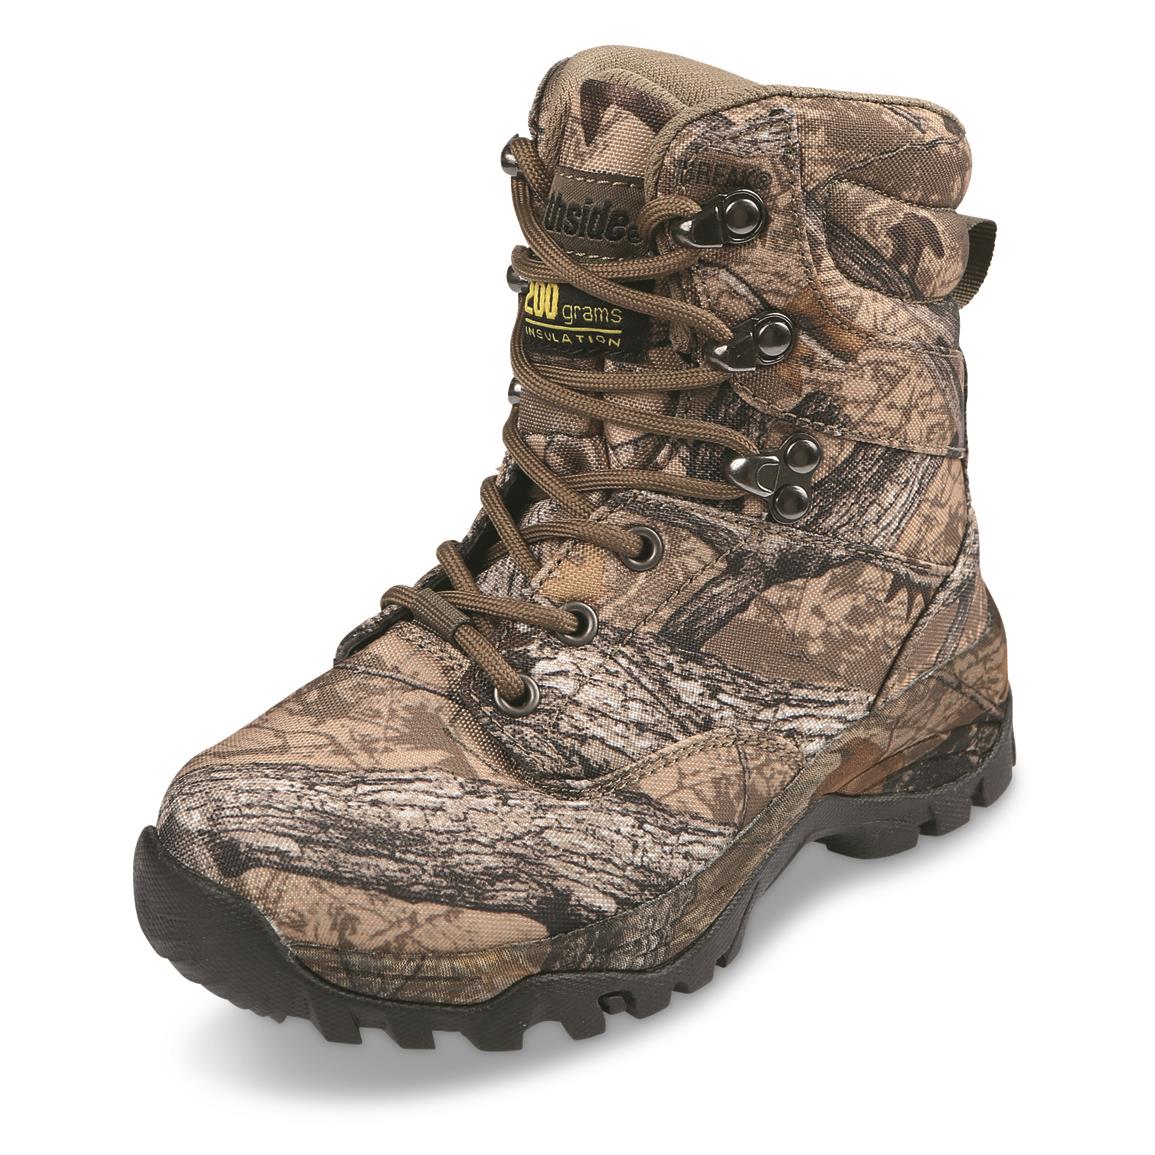 Northside Kids' Crossite Waterproof Insulated Hunting Boots, 200 Gram, Tan Camo